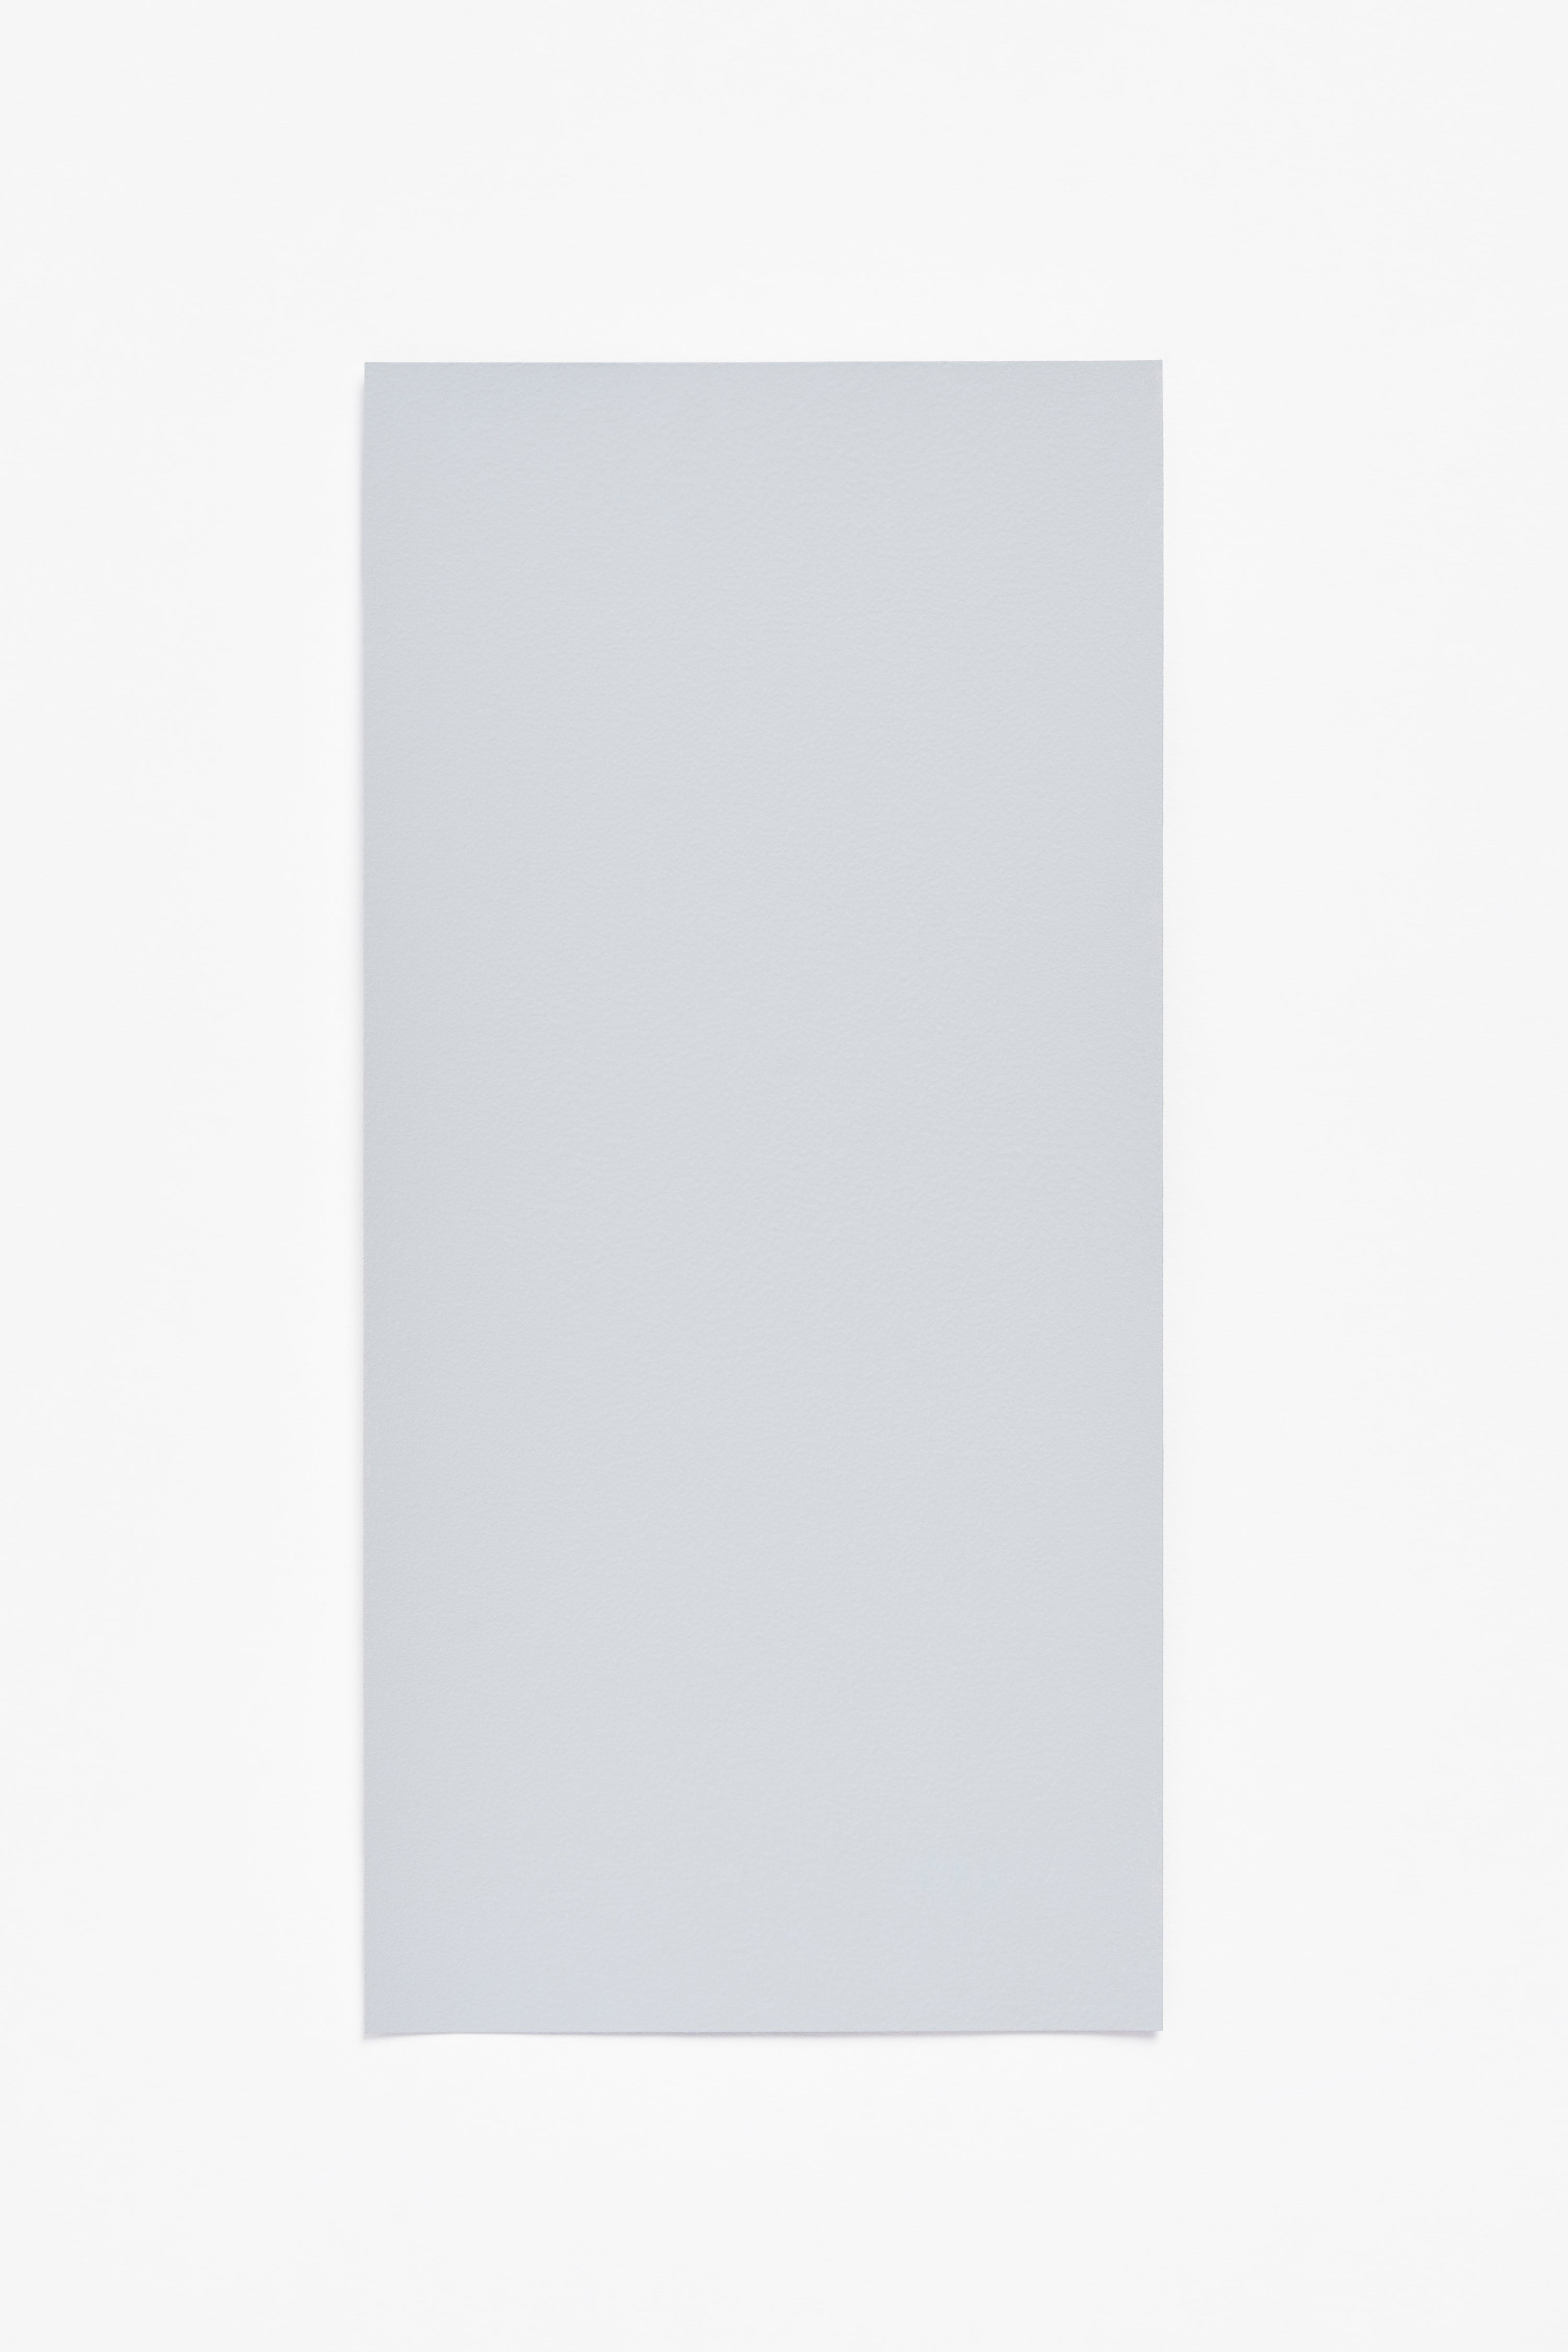 Grey — a paint colour developed by Muller Van Severen for Blēo